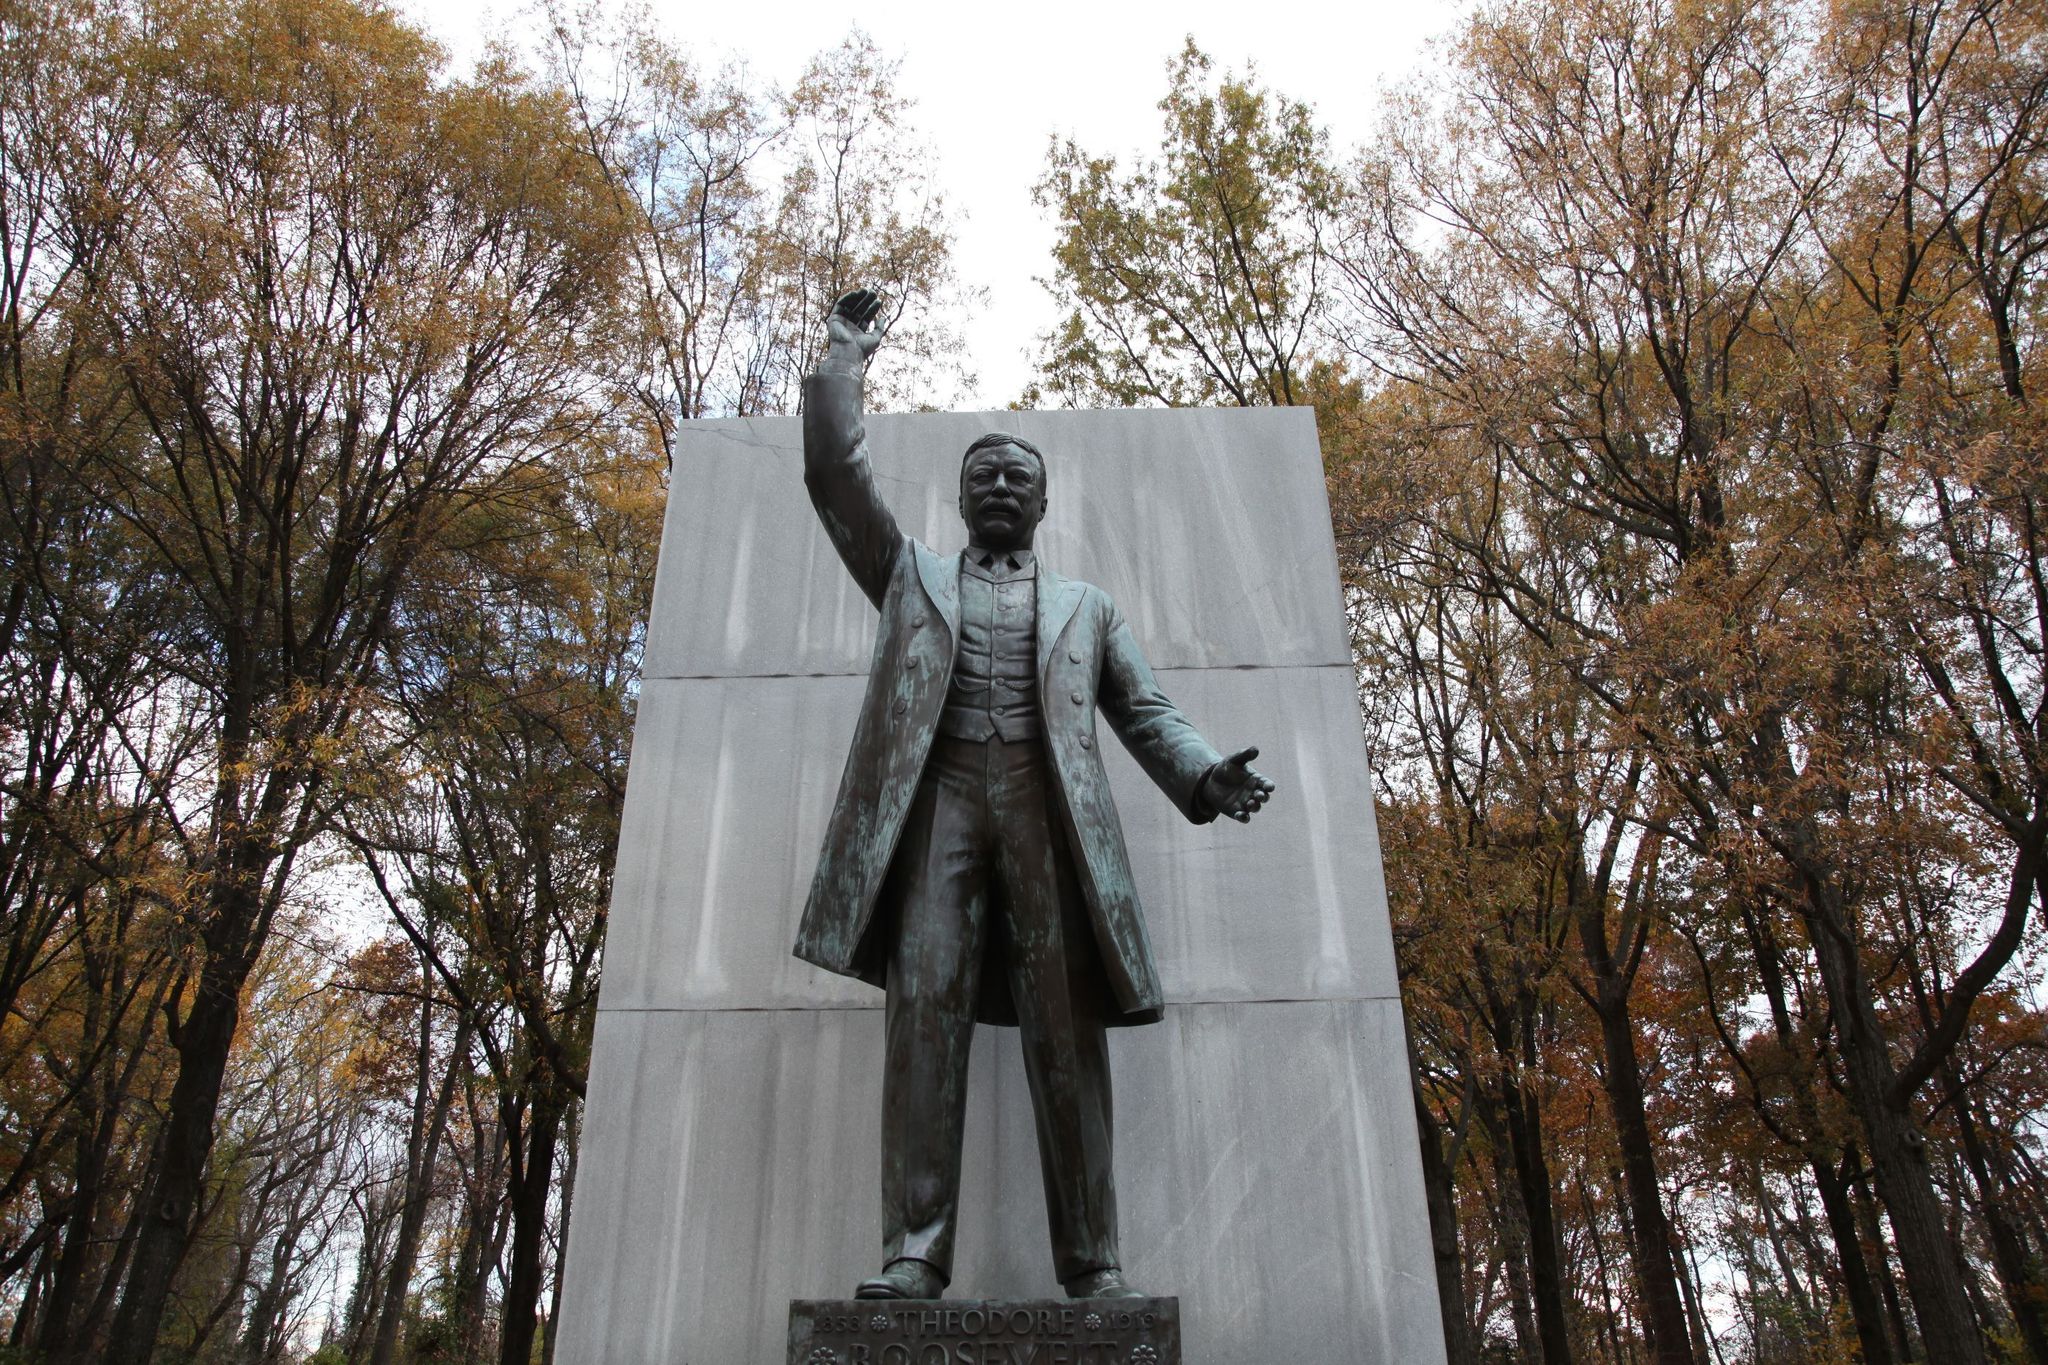 Theodore Roosevelt memorial plaza on Theodore Roosevelt Island.